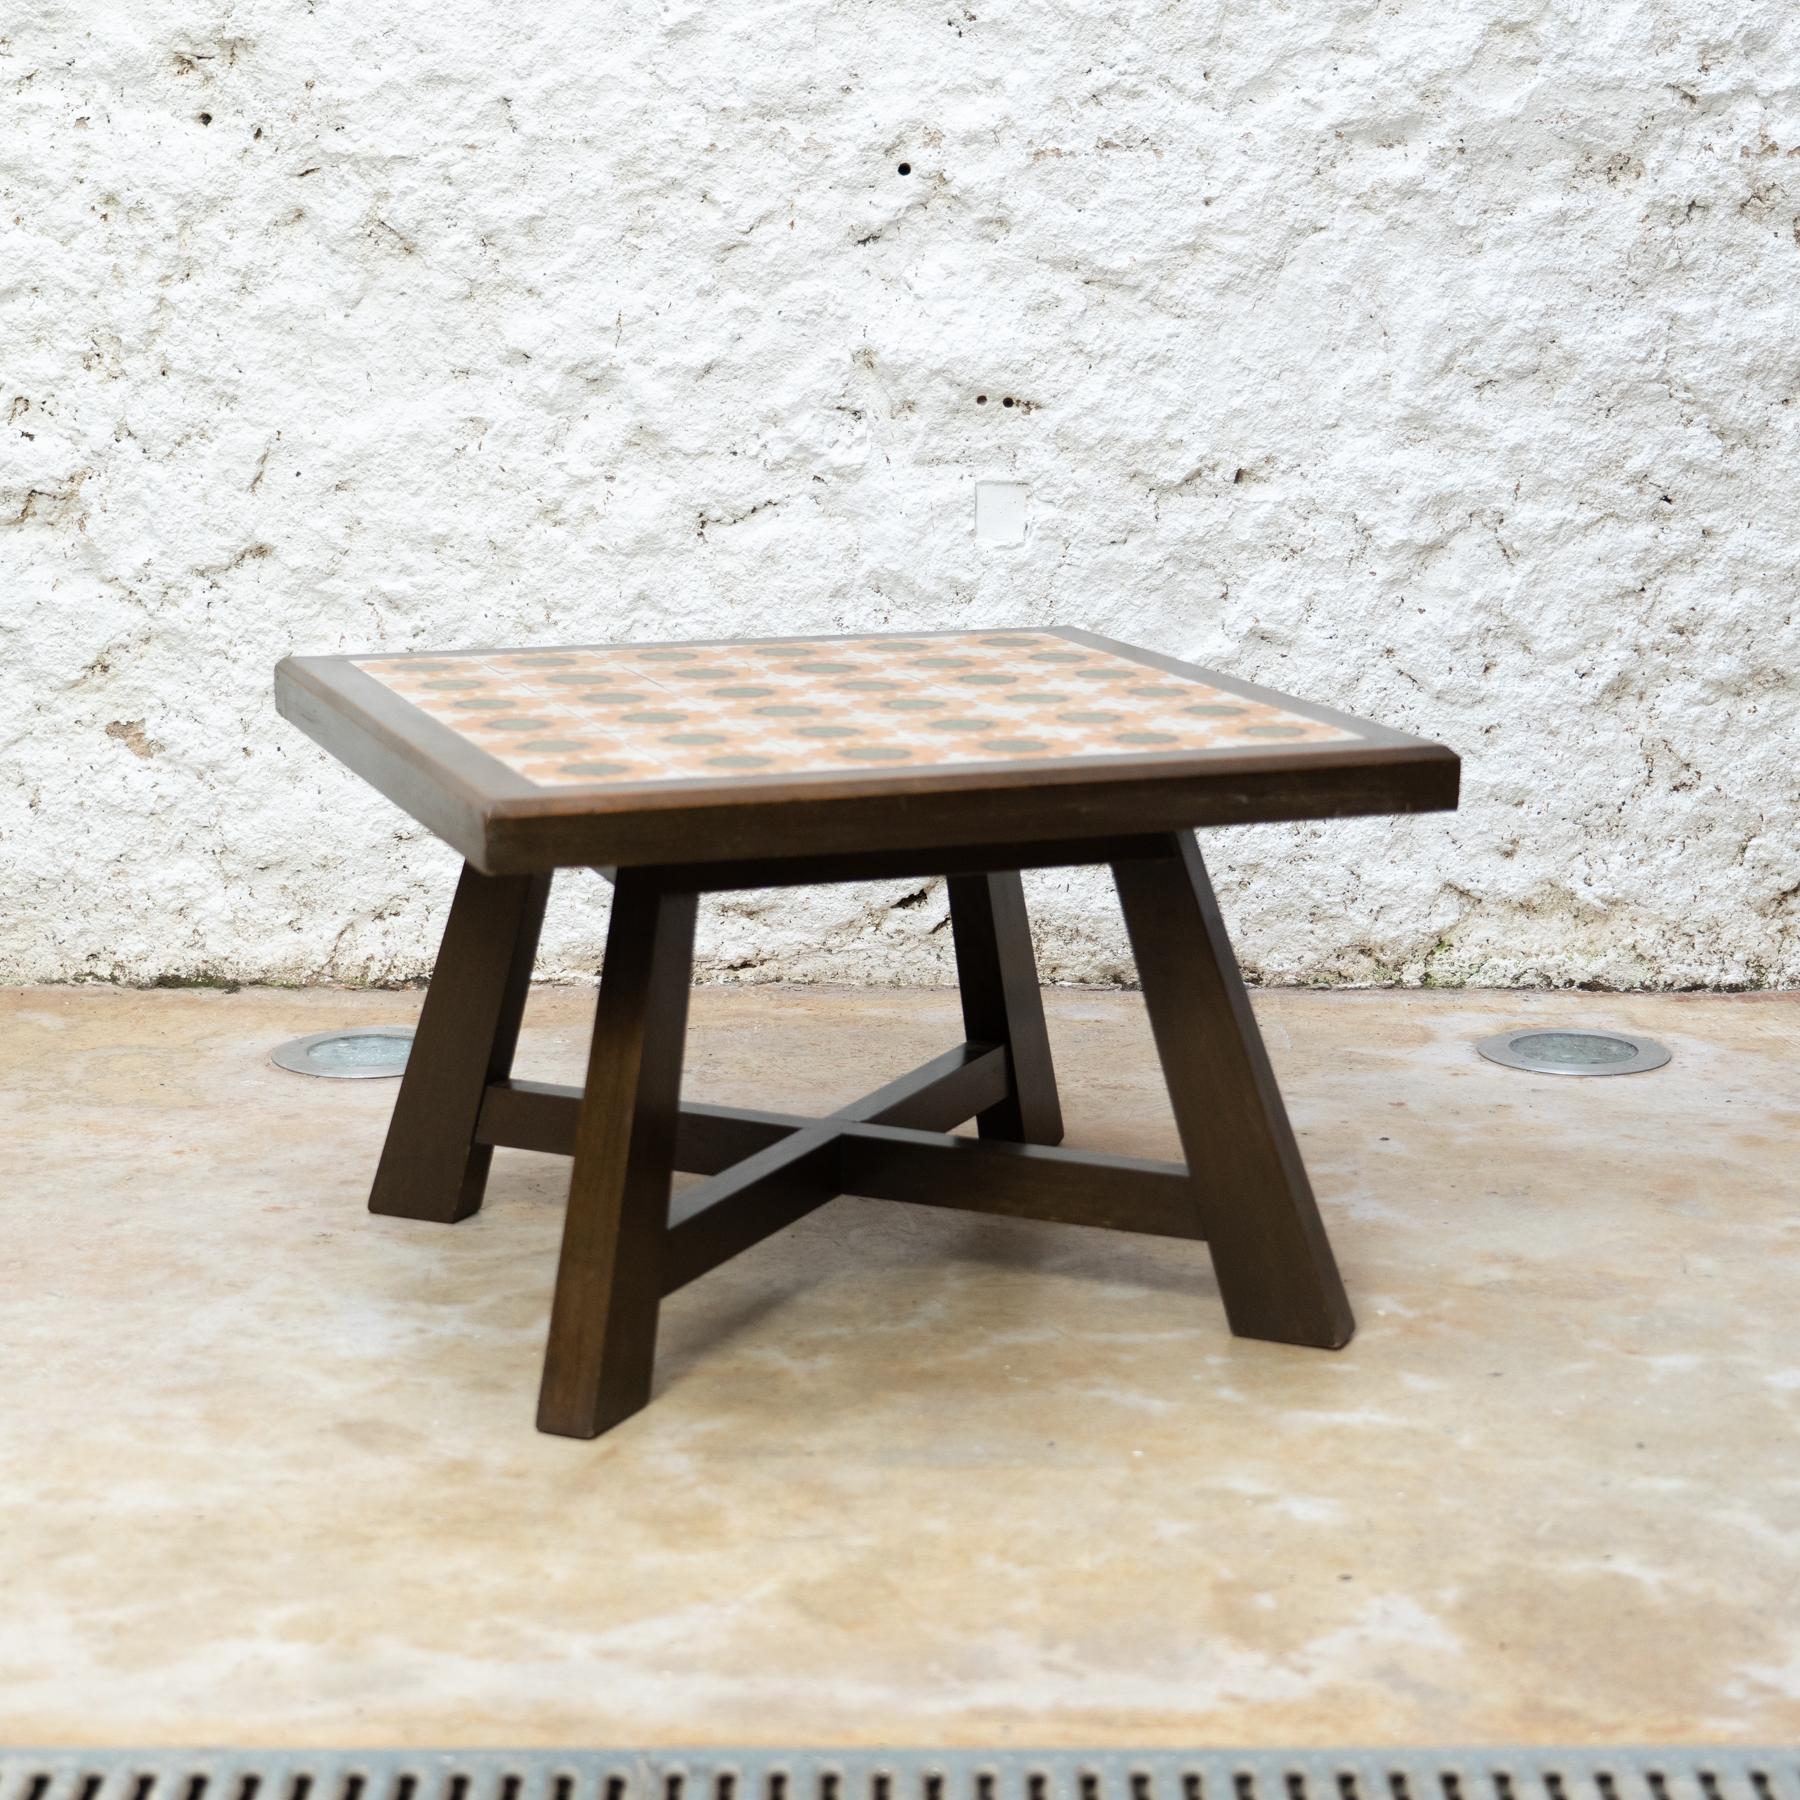 Mid-20th Century Jordi Vilanova Wood and Ceramic Coffee Table: Spanish Mid-century Masterpiece For Sale